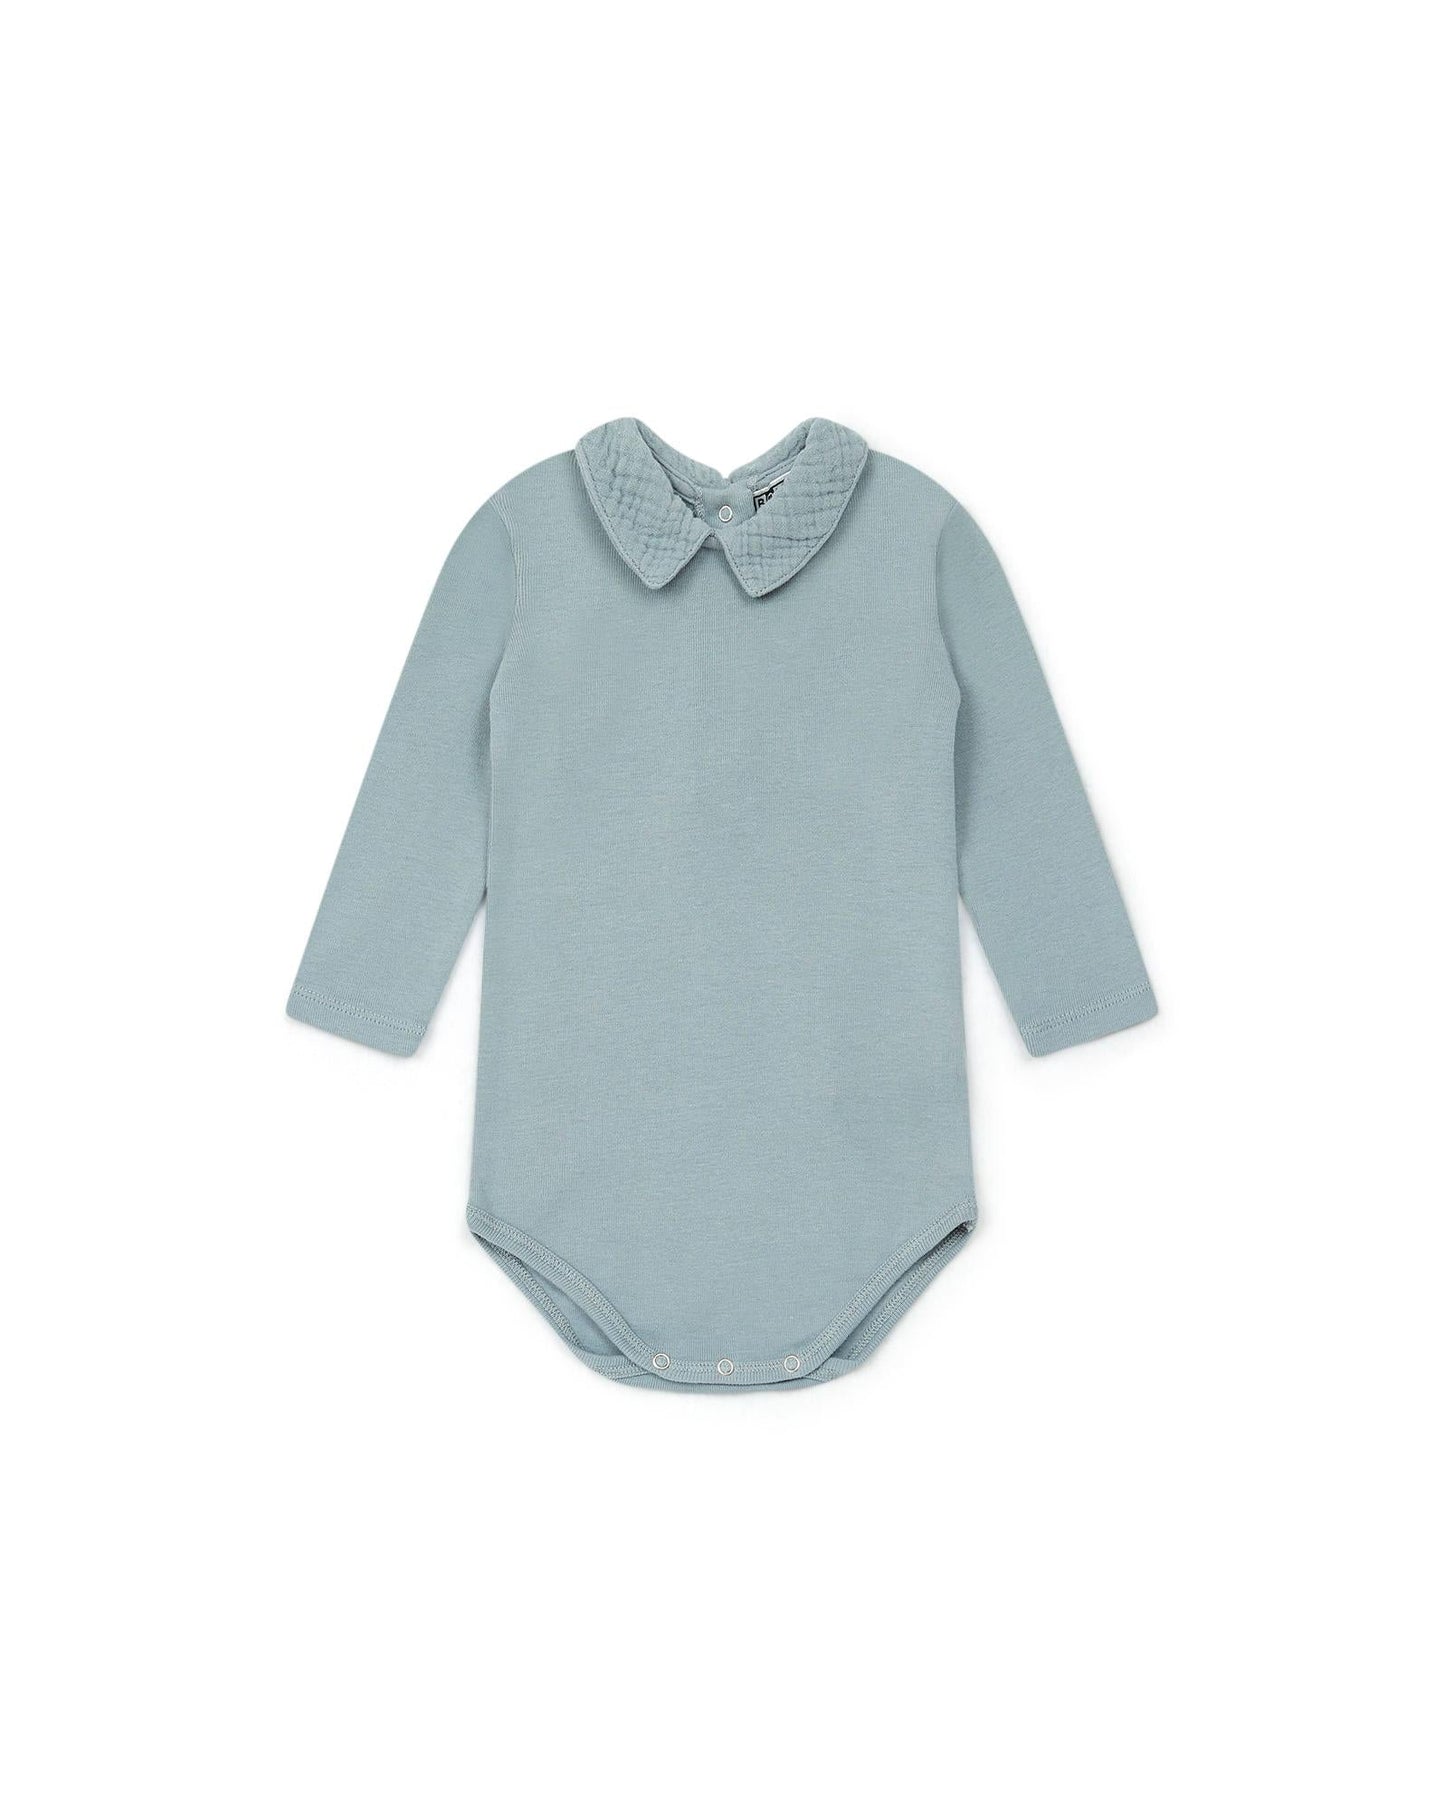 Body - Baby Boy Collar at 100% reverse Organic cotton